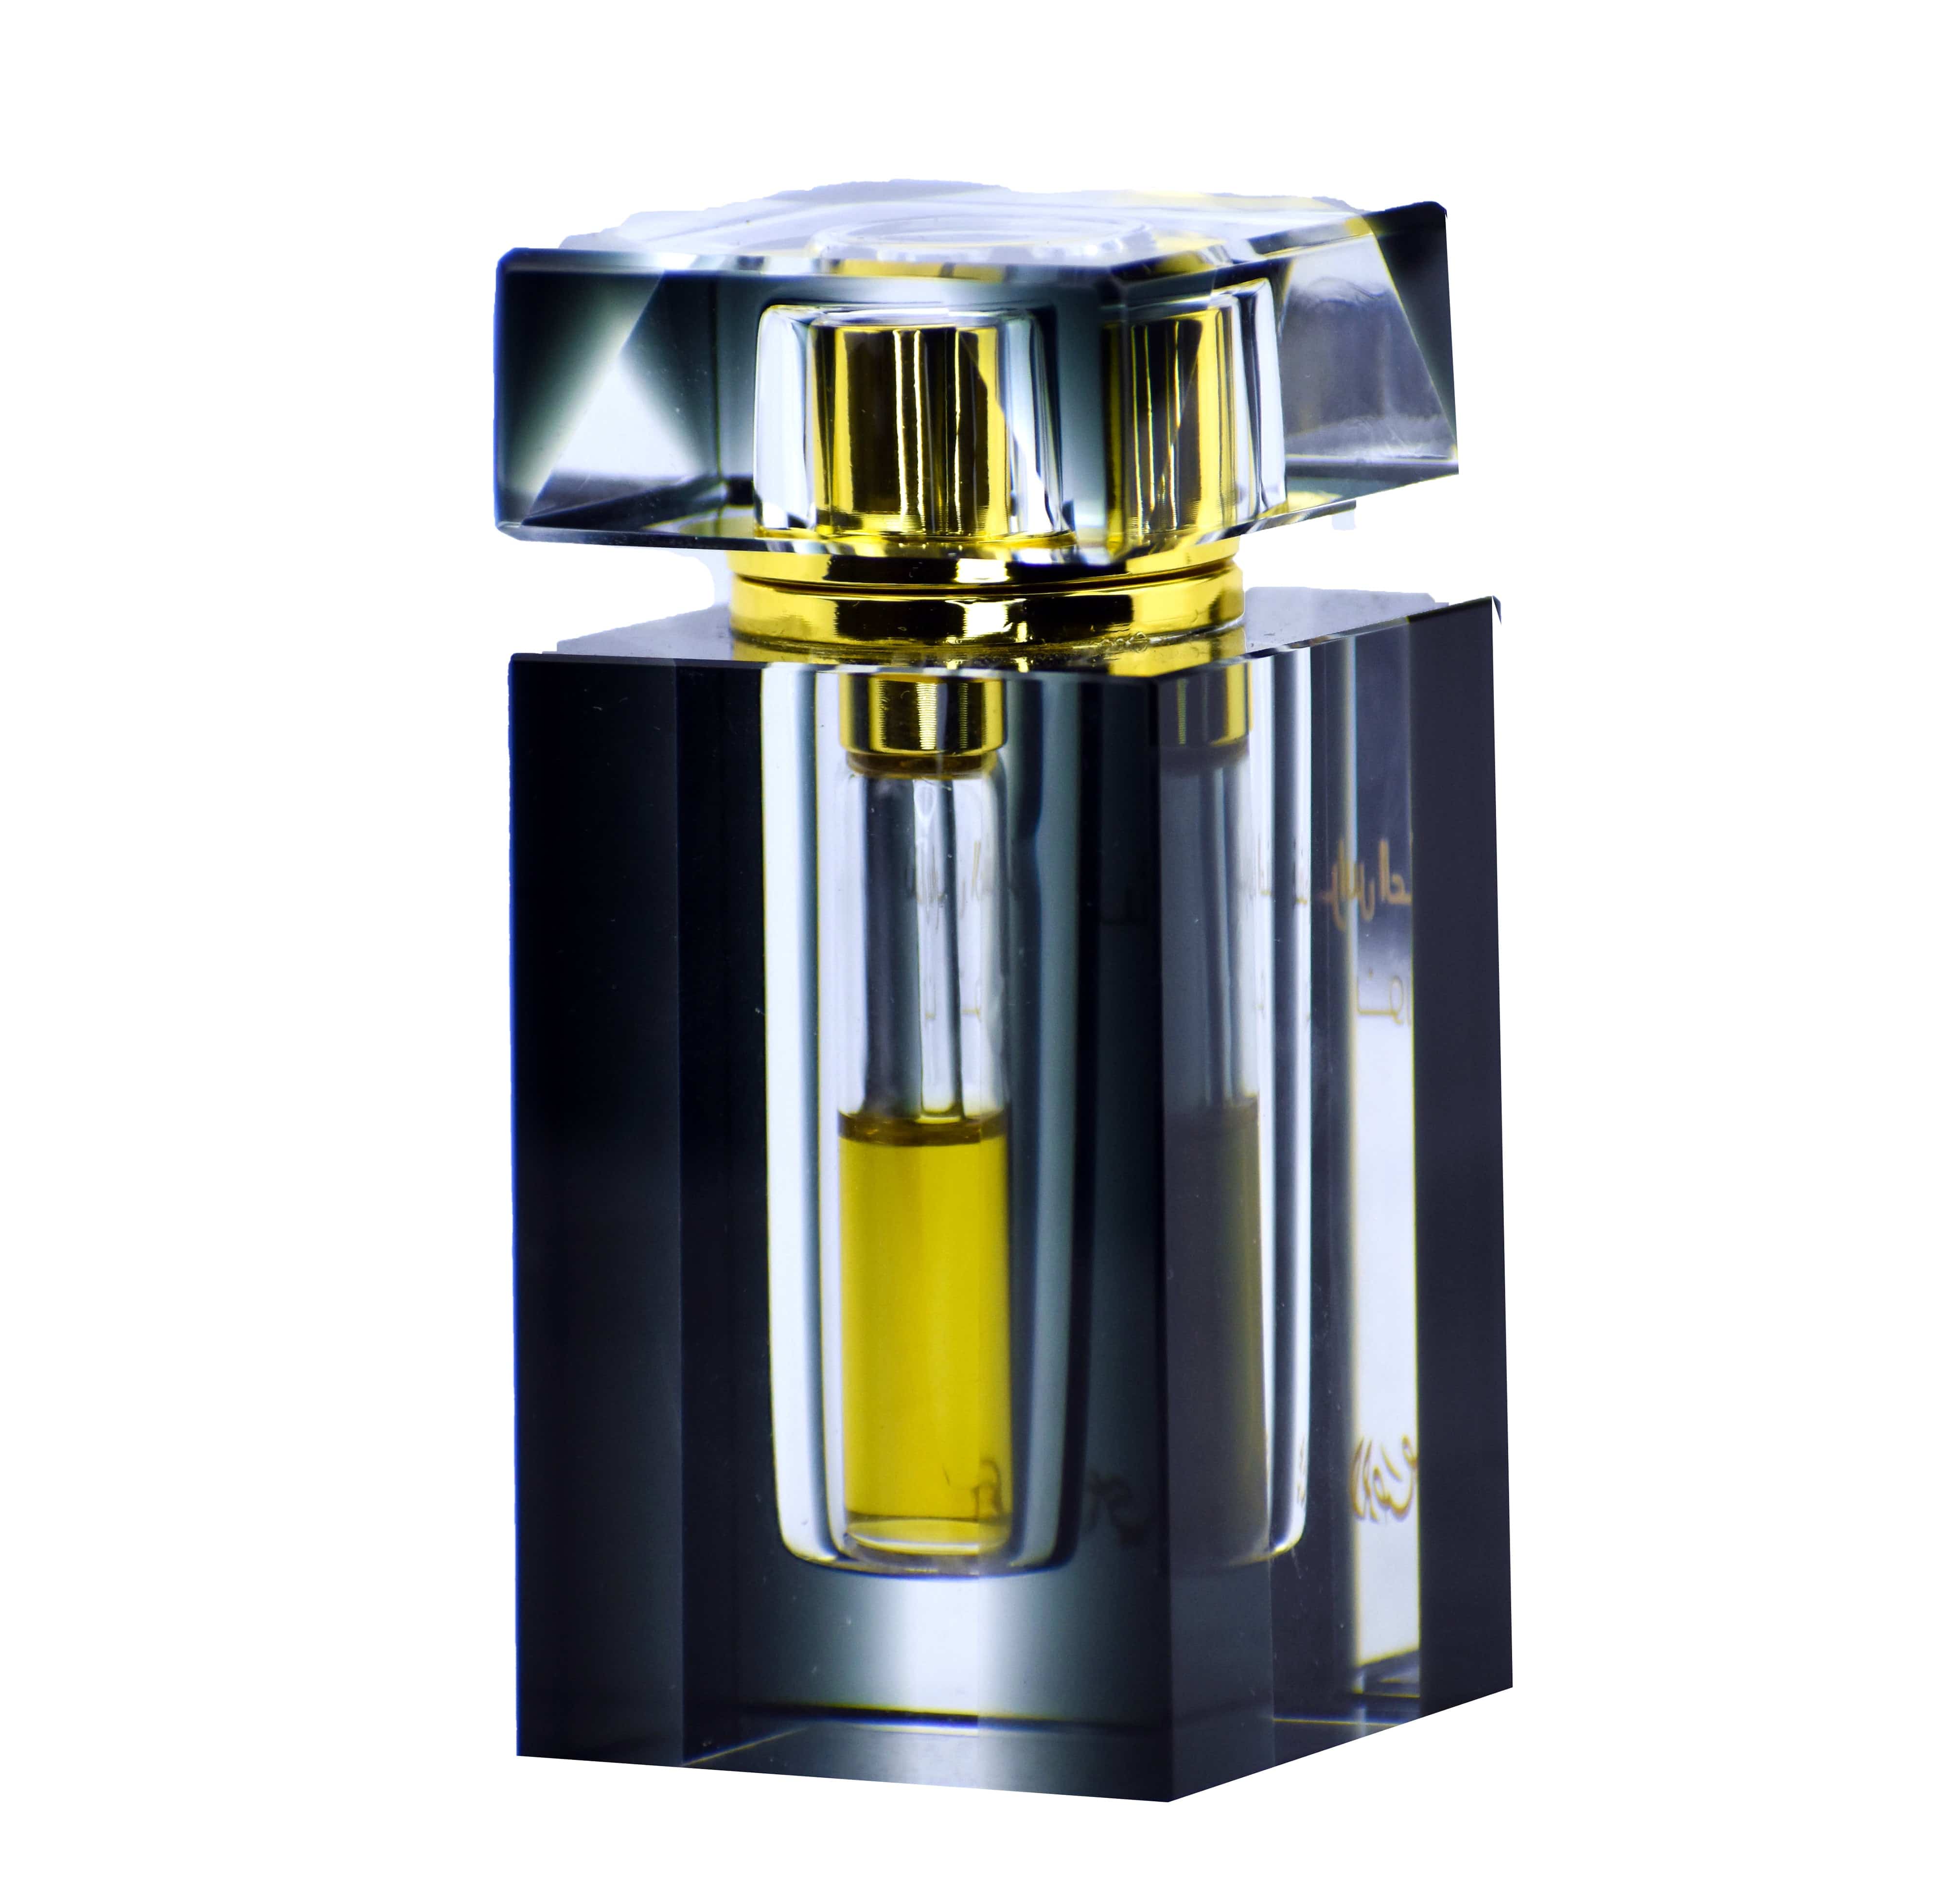 Nebras Al Ishq Noor Perfume Oil -  6 ML (0.2 oz) by Rasasi - Intense oud